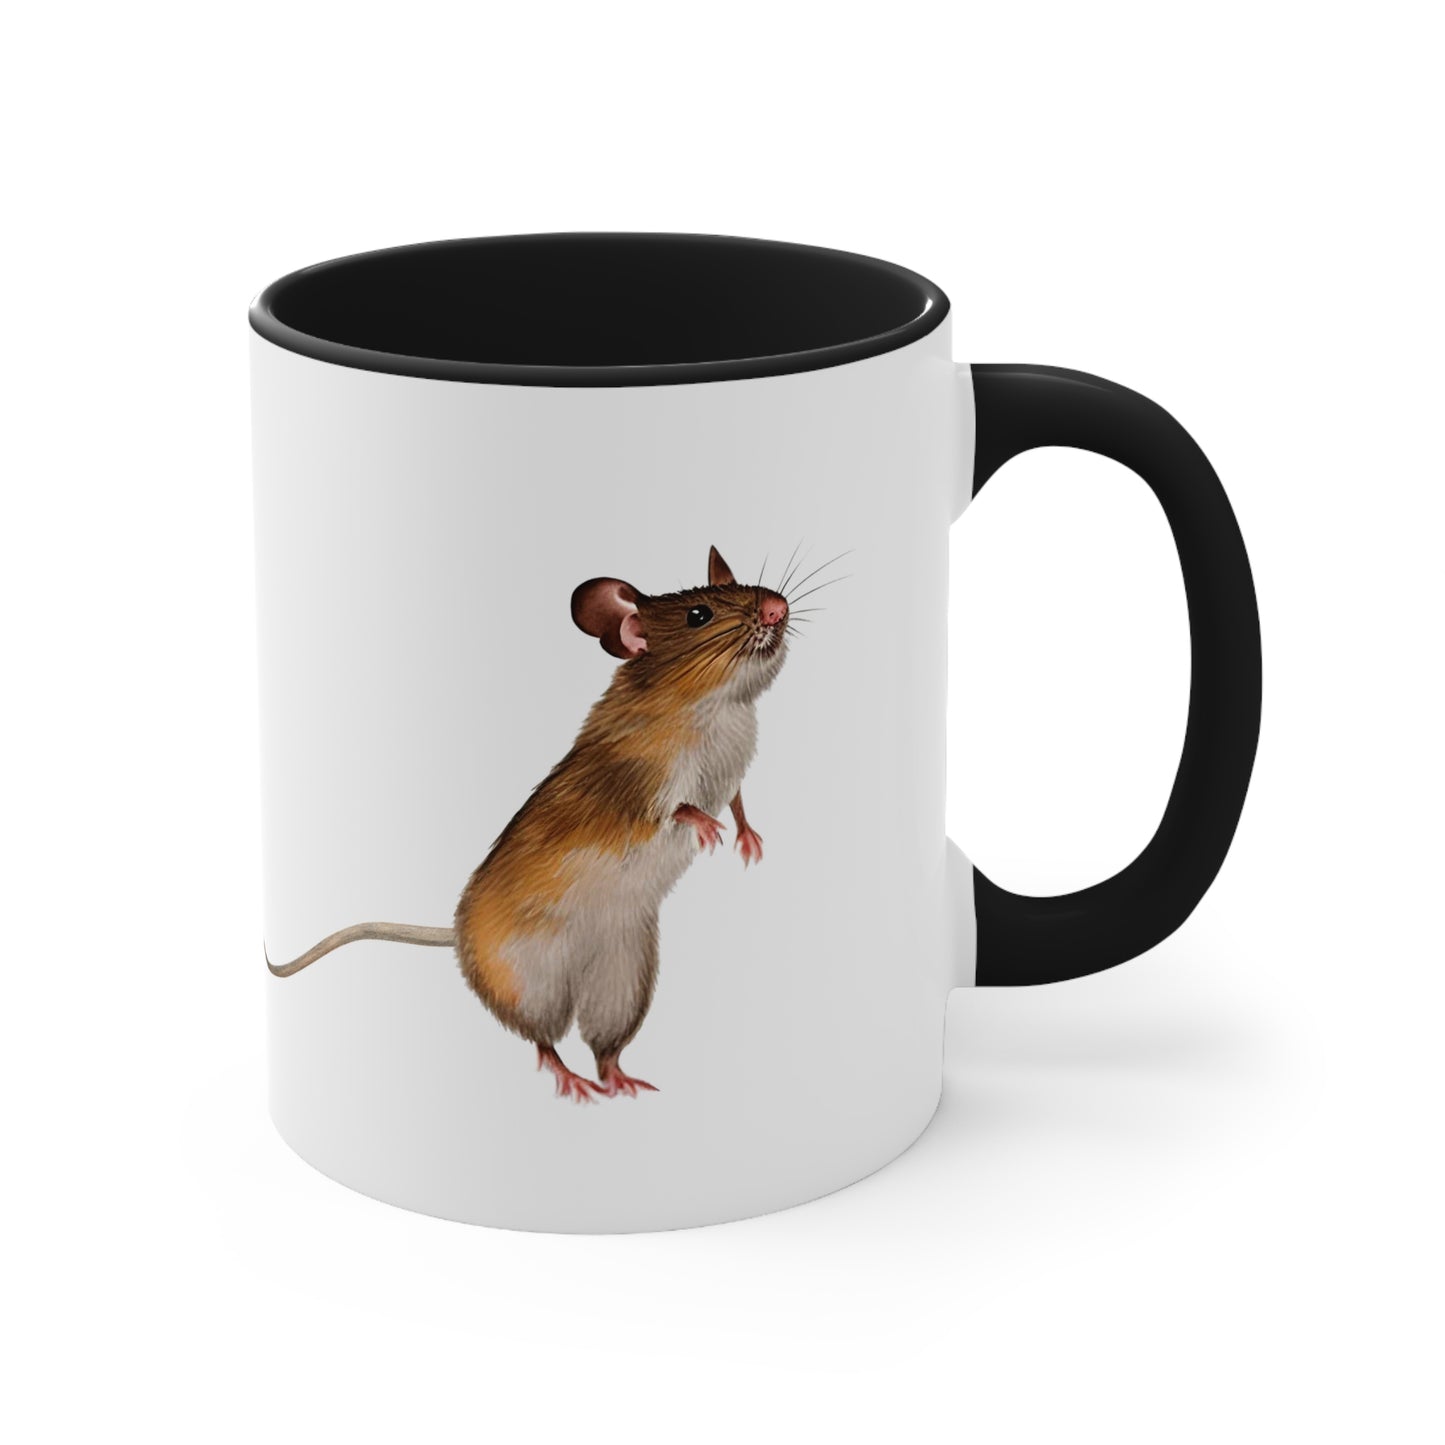 Inquisitive Mouse Ceramic Mug